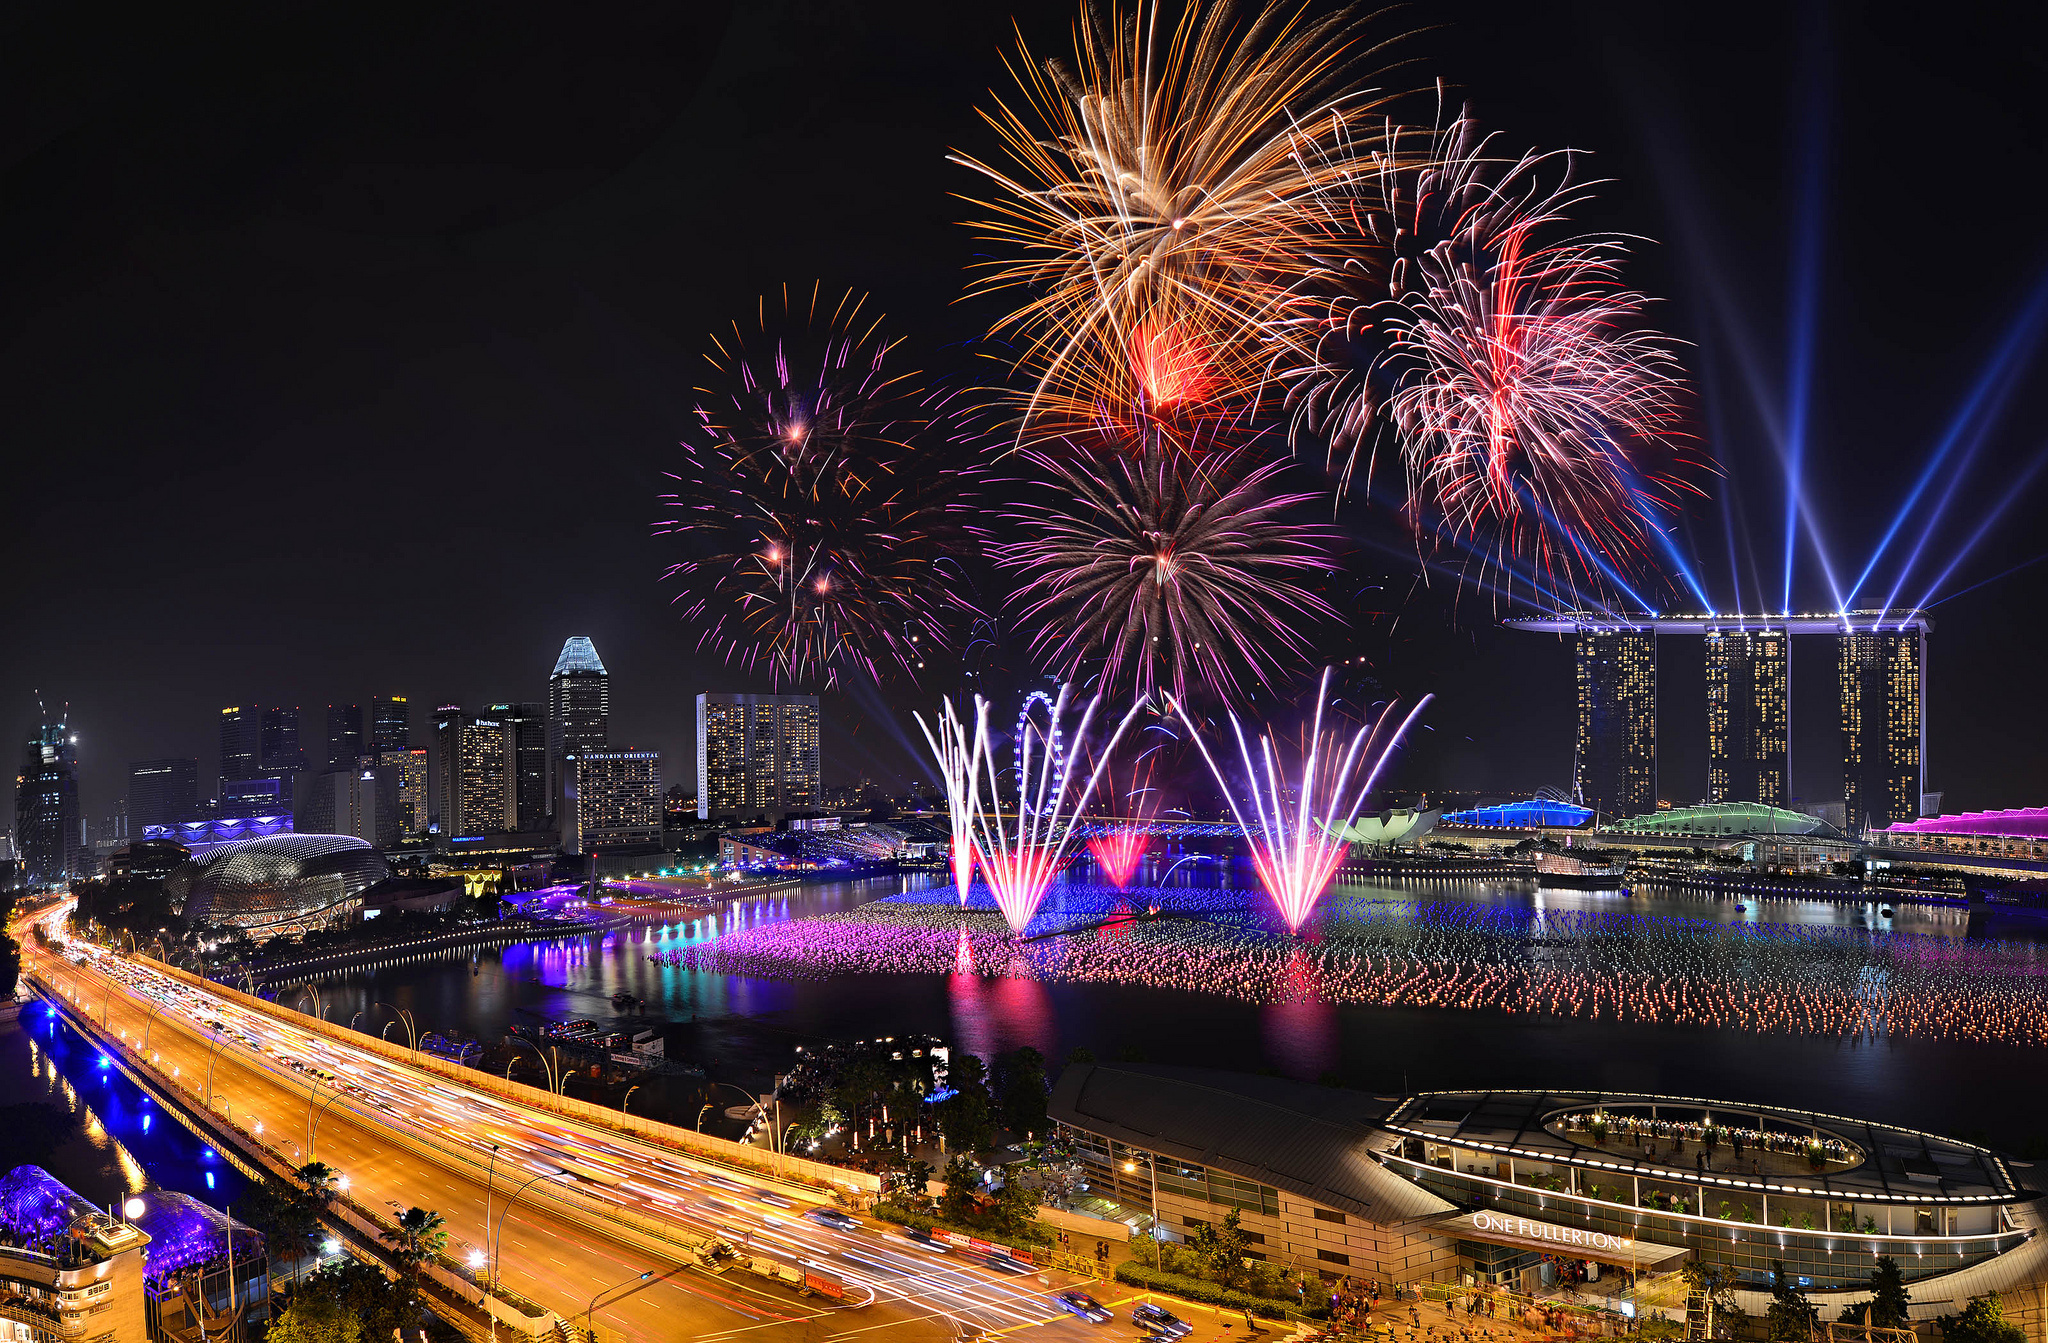 Singapore fireworks night 2014 new year wallpaper